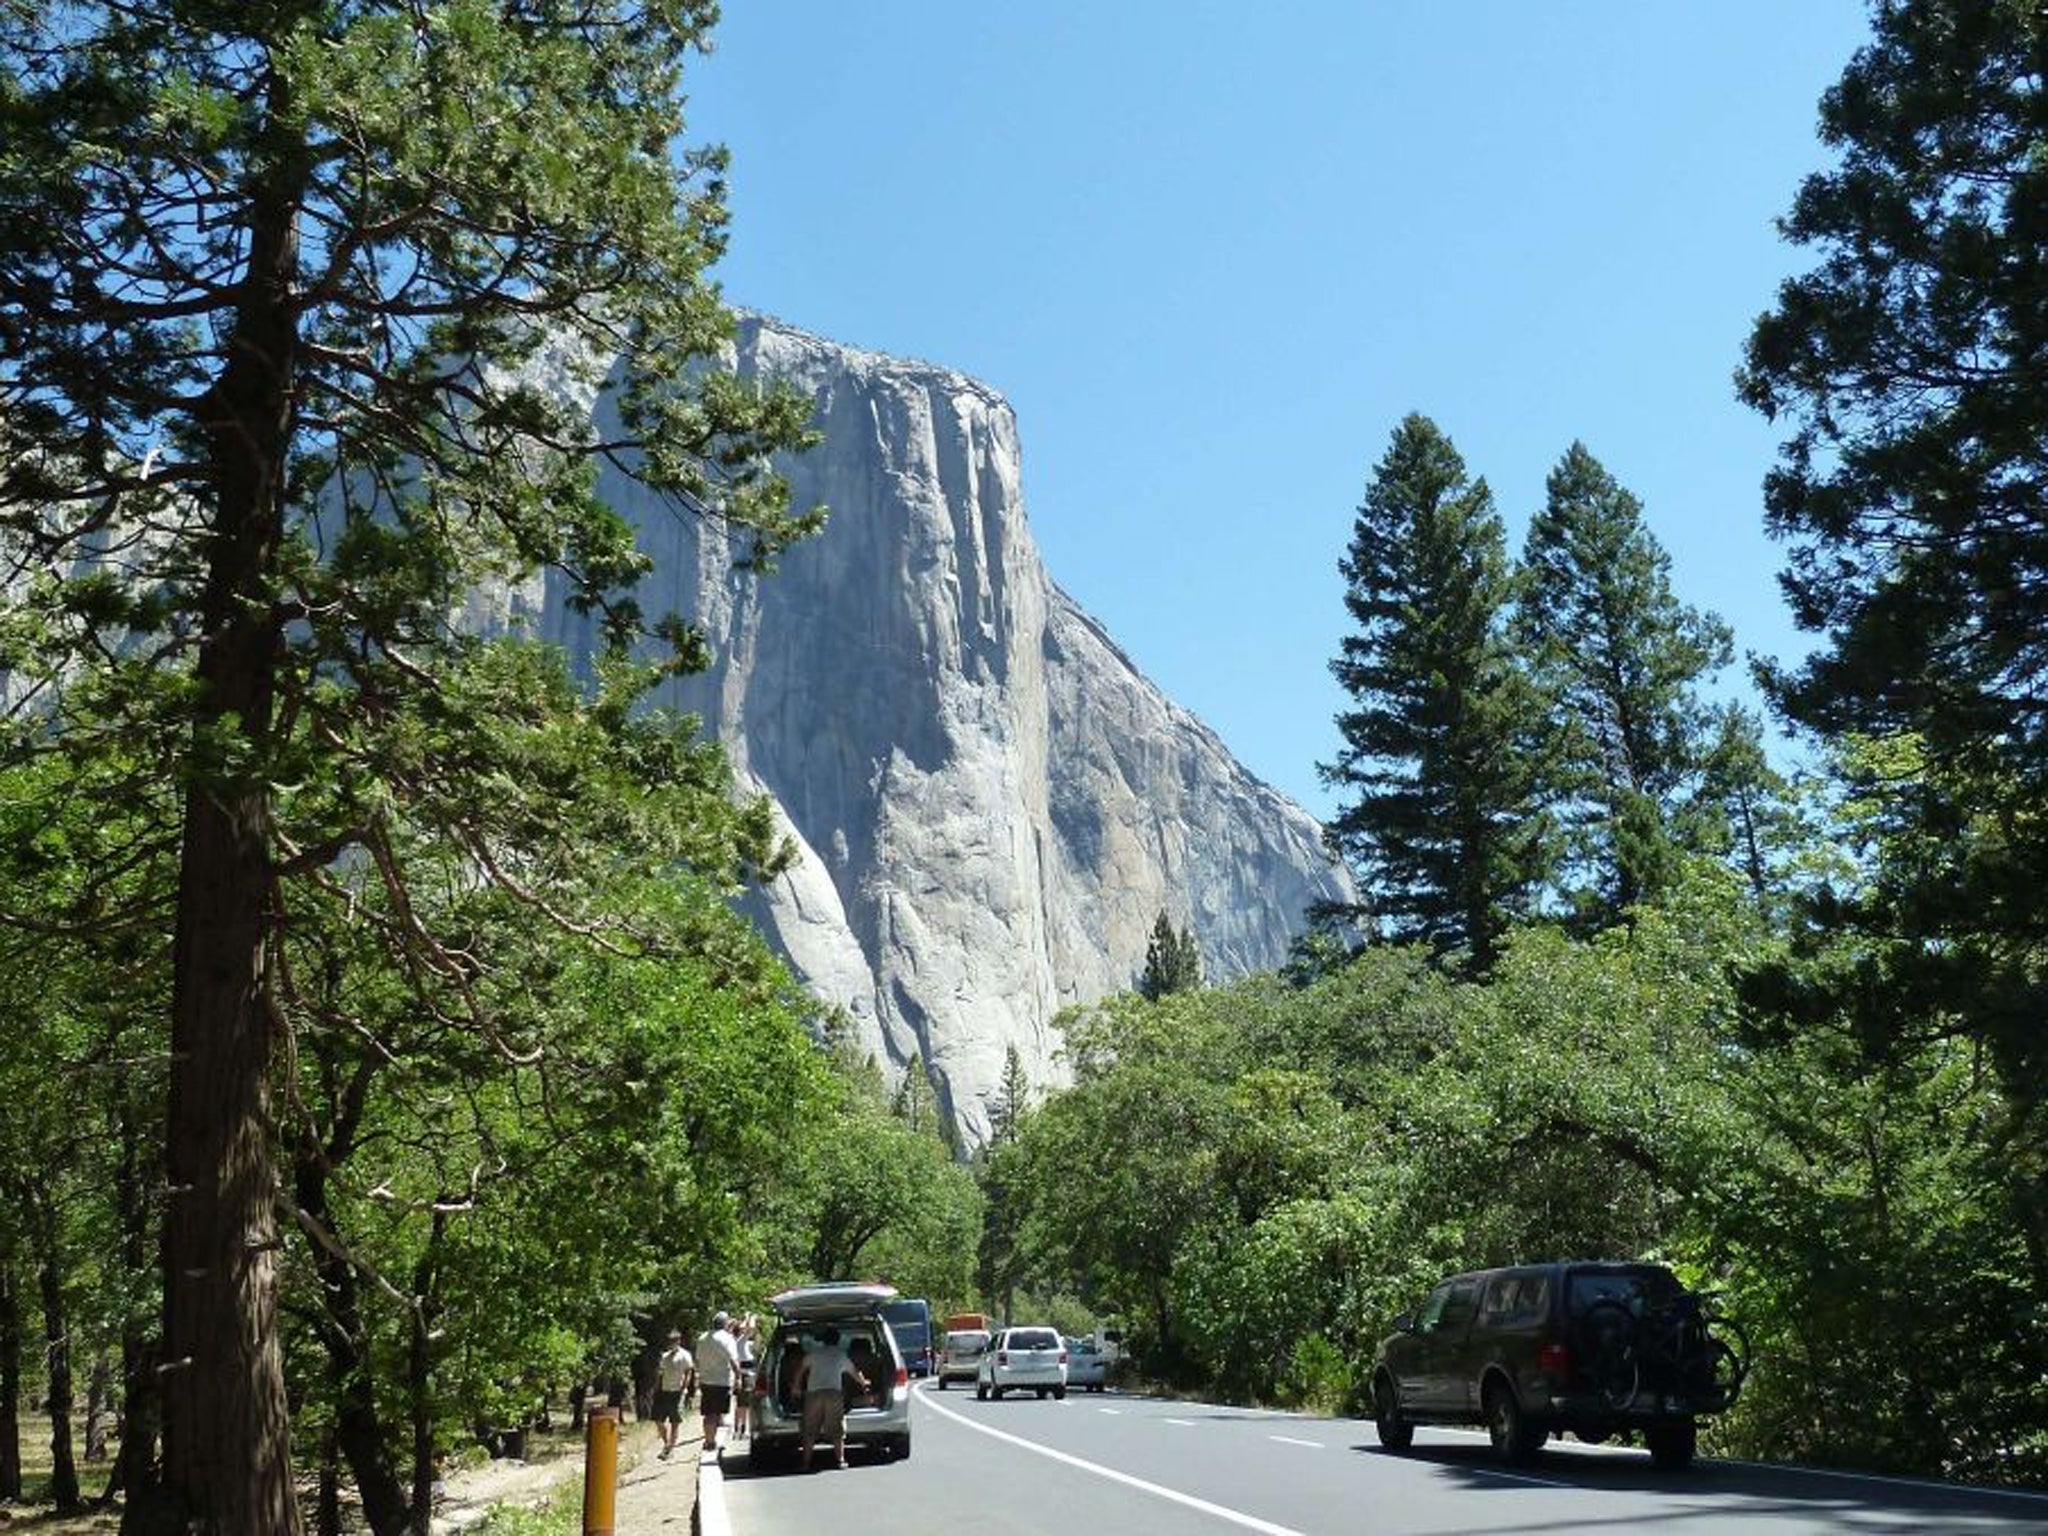 Felix Joseph Kiernan was killed during a climbing trip at California's Yosemite National Park